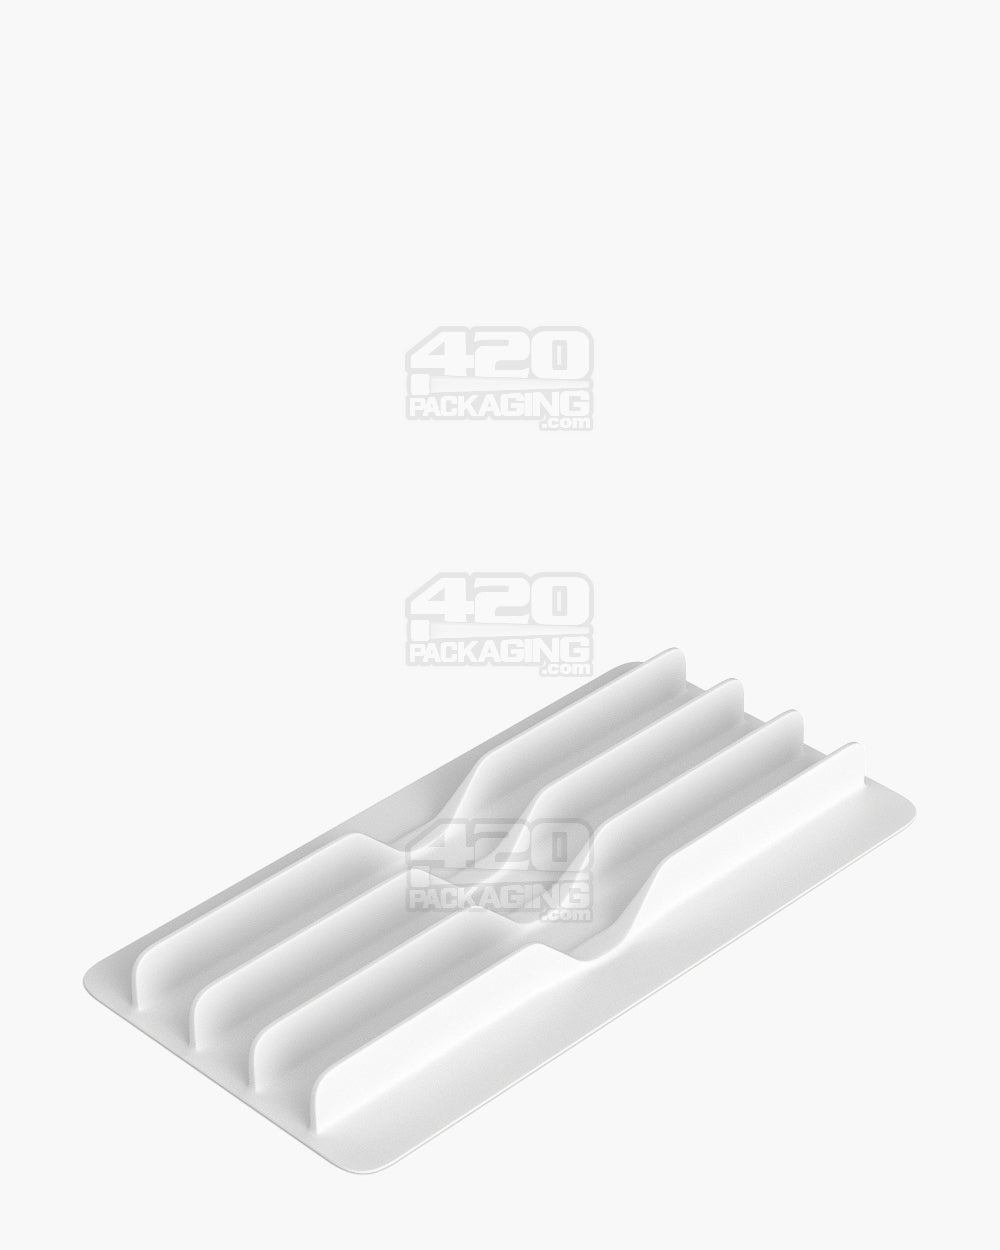 25mm Pollen Gear SnapTech Large White Plastic Insert Tray Foam 2500/Box - 4